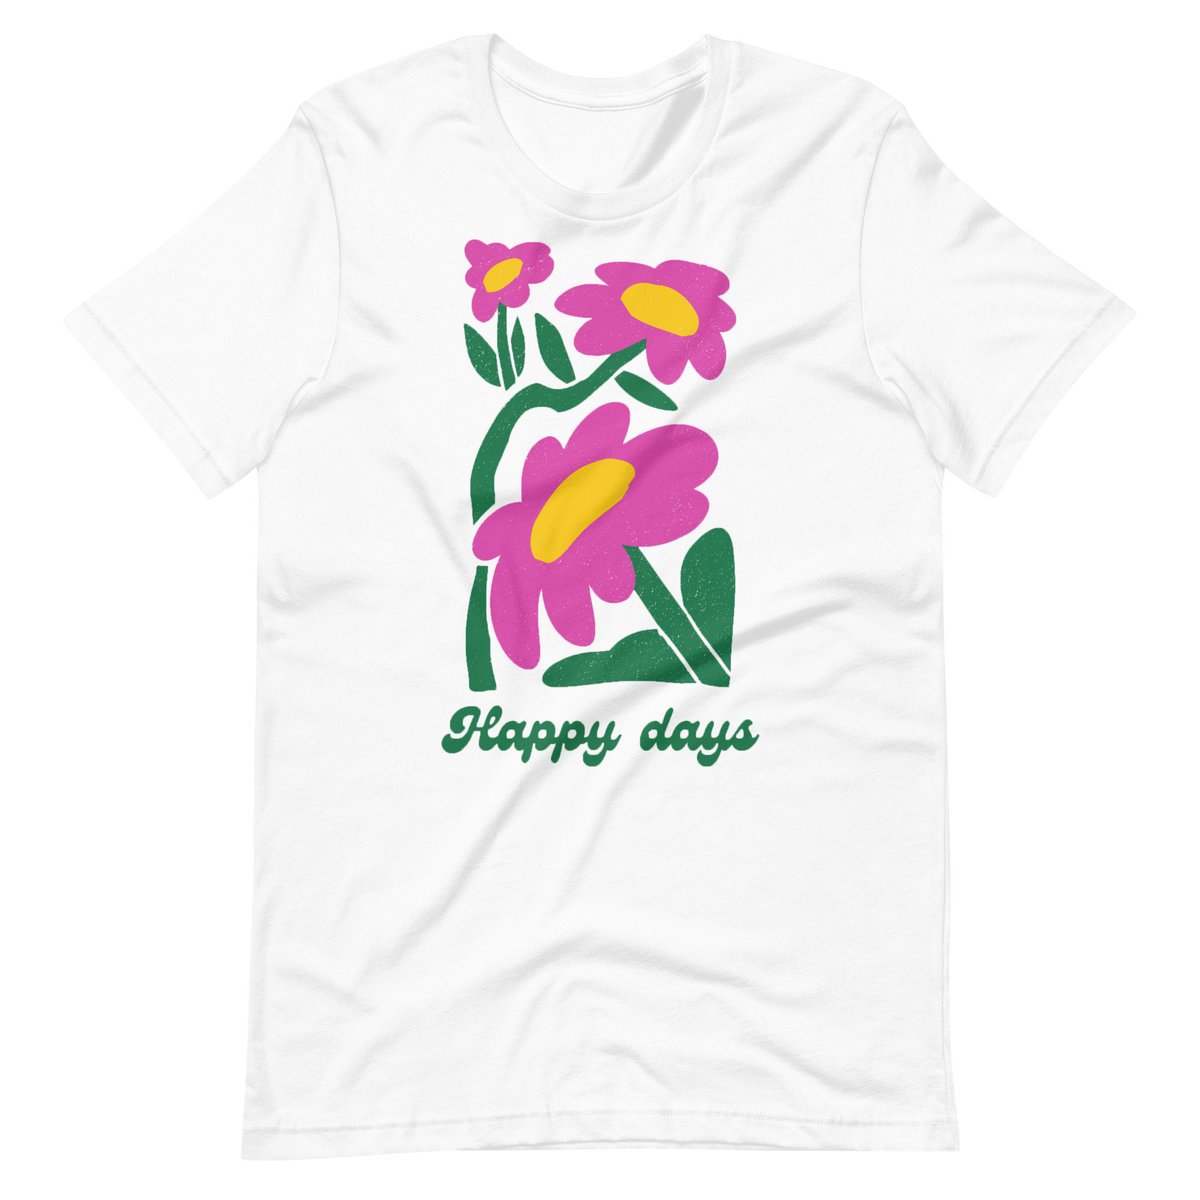 Excited to share the latest addition to my #etsy shop: Happy Days Unisex t-shirt trending New etsy.me/42LfQD5 #shortsleeve #scoop #bohohippie #tshirt #retrotshirts #vintagetshirts #cutetshirts #cooltshirts #popculturetshirts